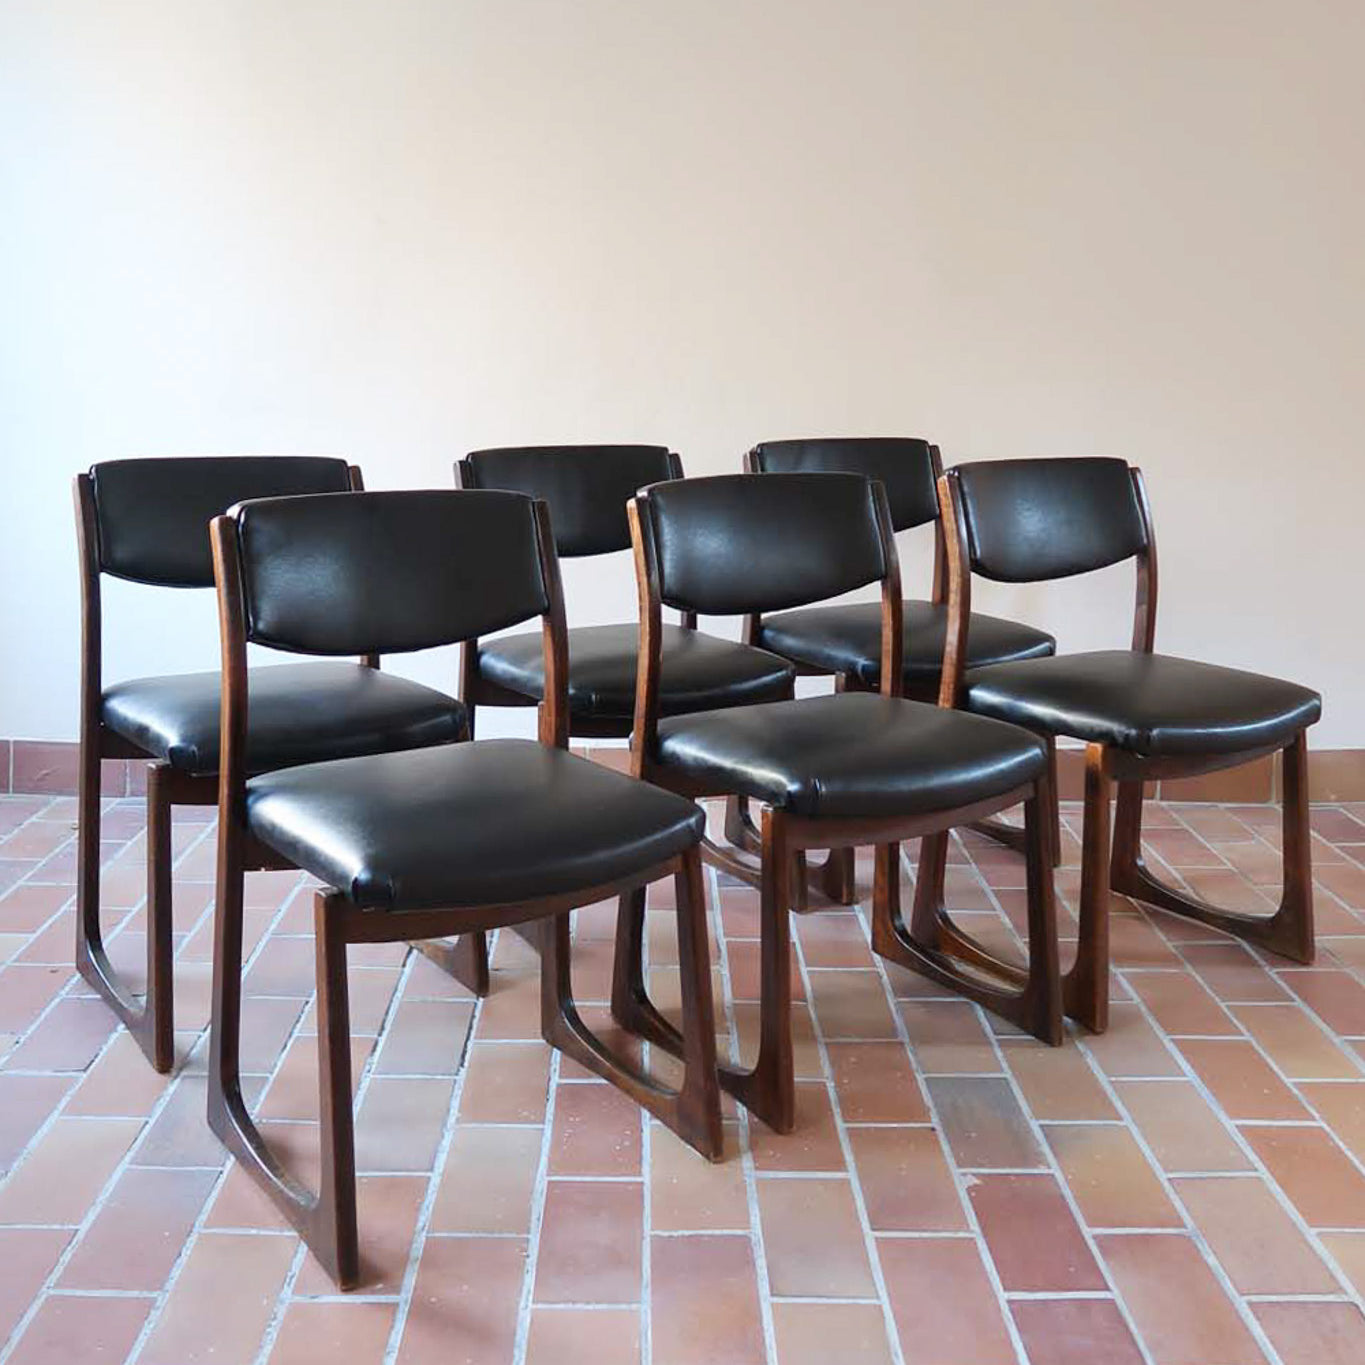 6 chaises traineau self made in france baumann vintage hêtre skaï noir